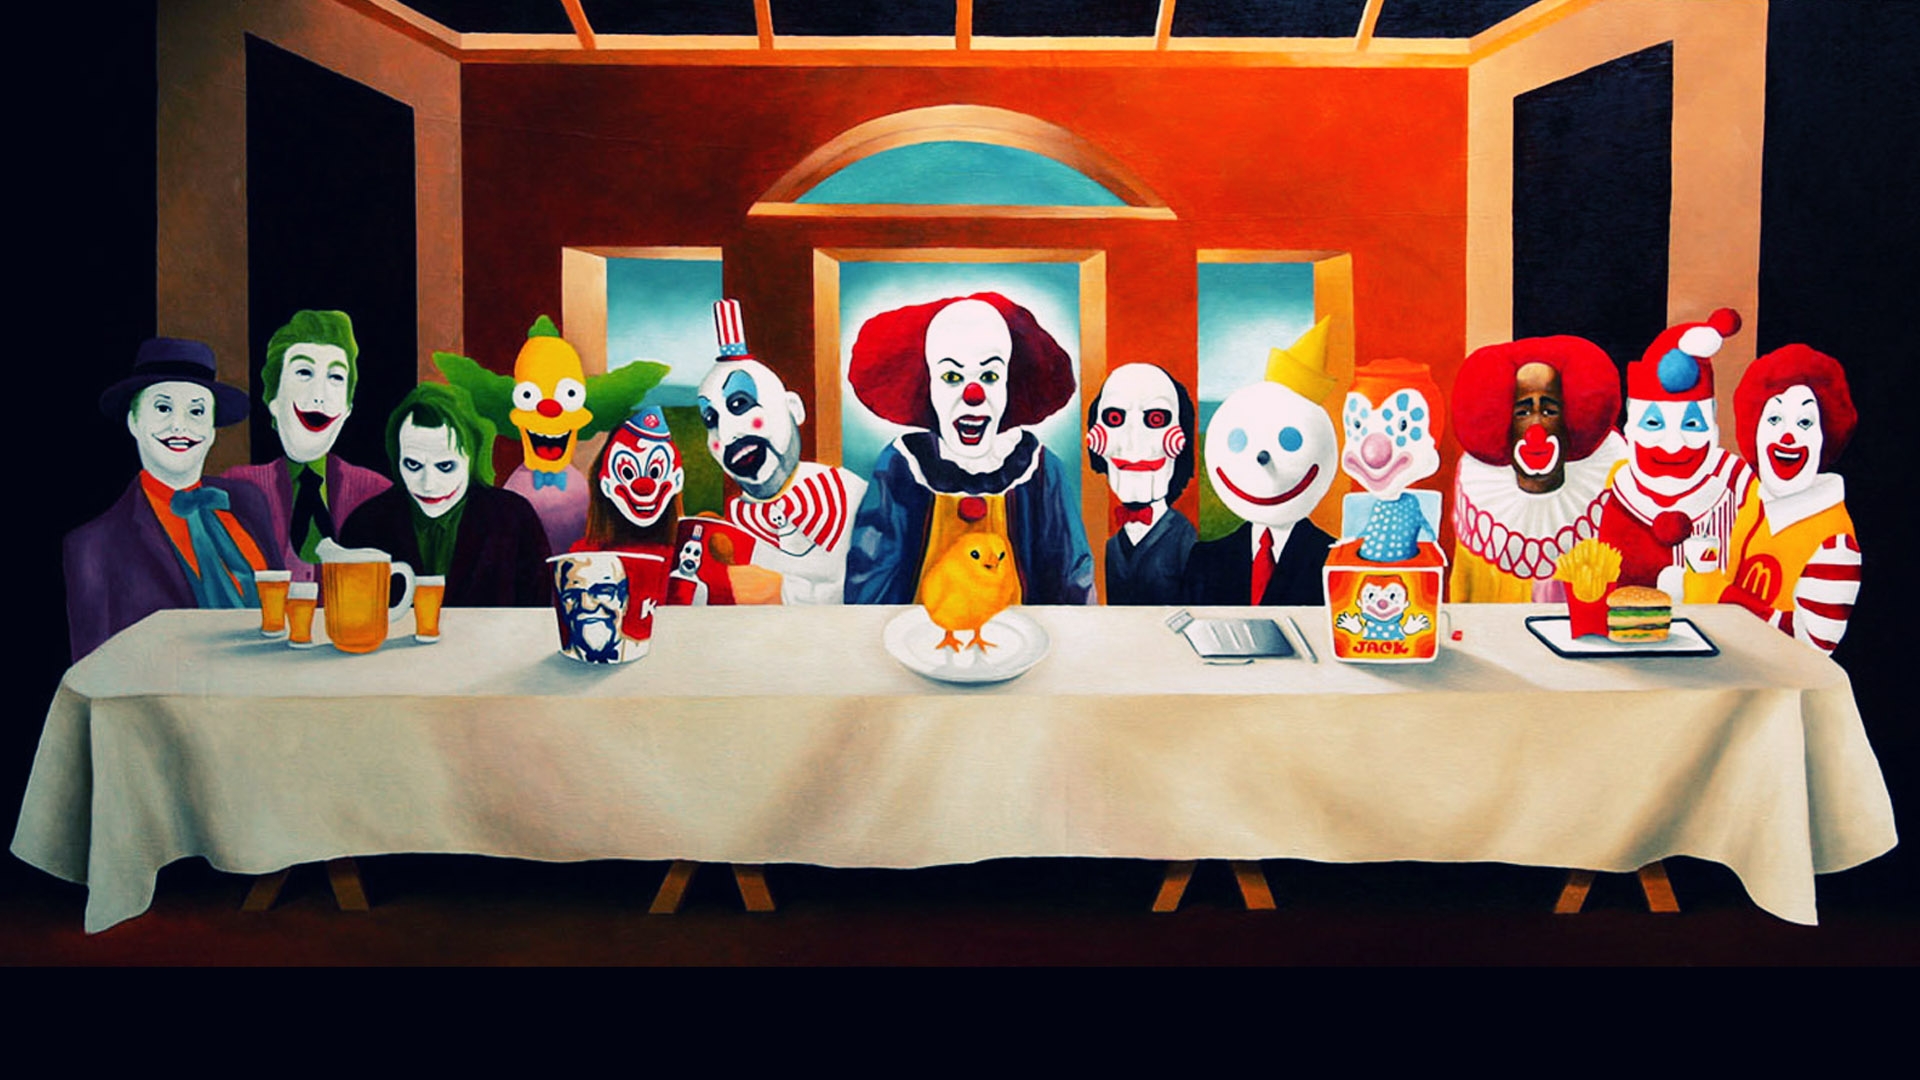 paintings, The, Joker, Clown, Jack, Ronald, Mcdonald, Last, Supper, Kfc, Last, Supper, Clowns, Mascot, Humor, Sadic Wallpaper